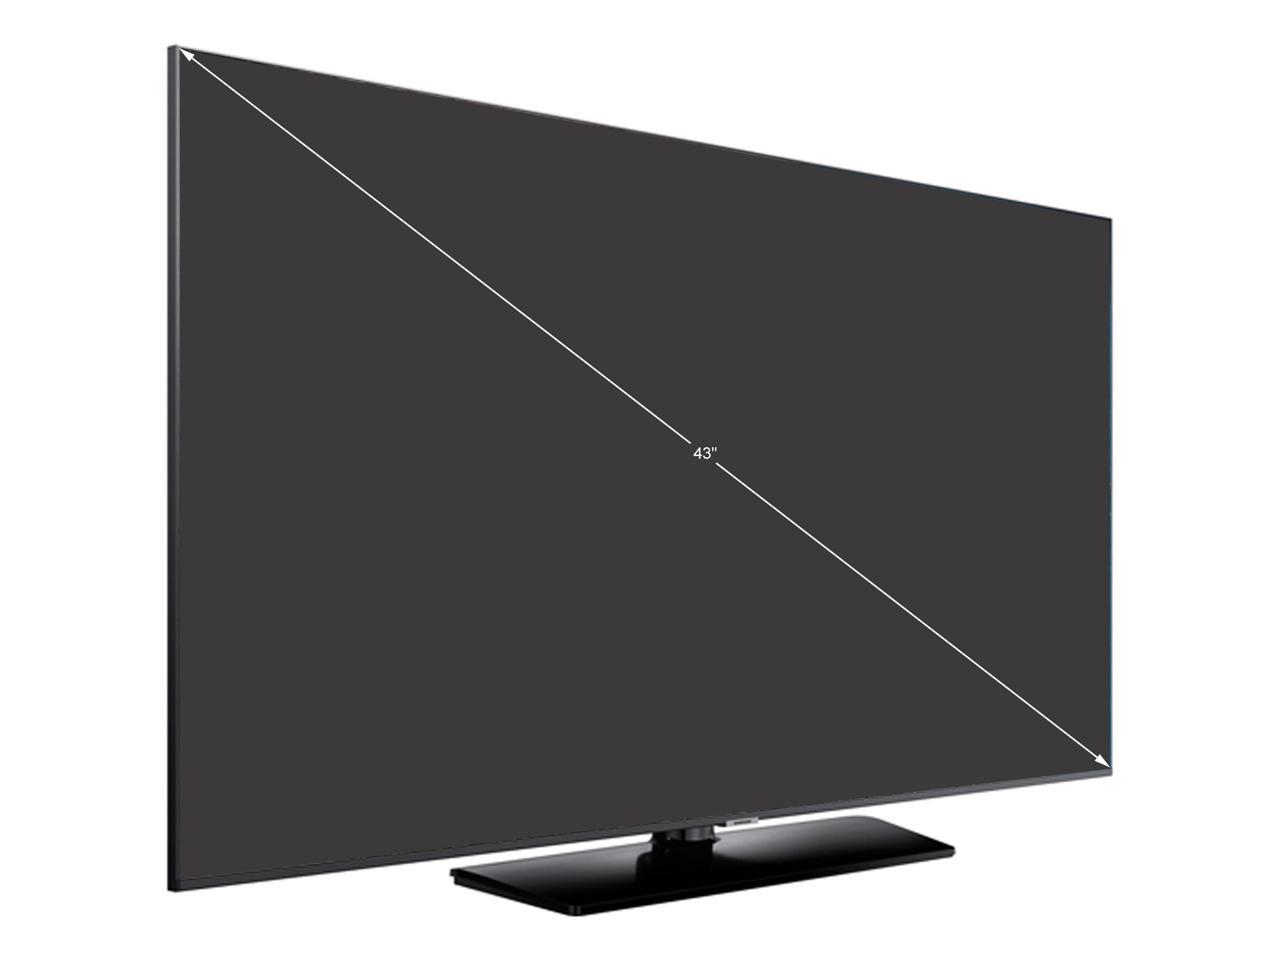 Samsung 43" Class 4K UHDTV (2160p) LED-LCD TV (HG43NT670UF) - image 2 of 4